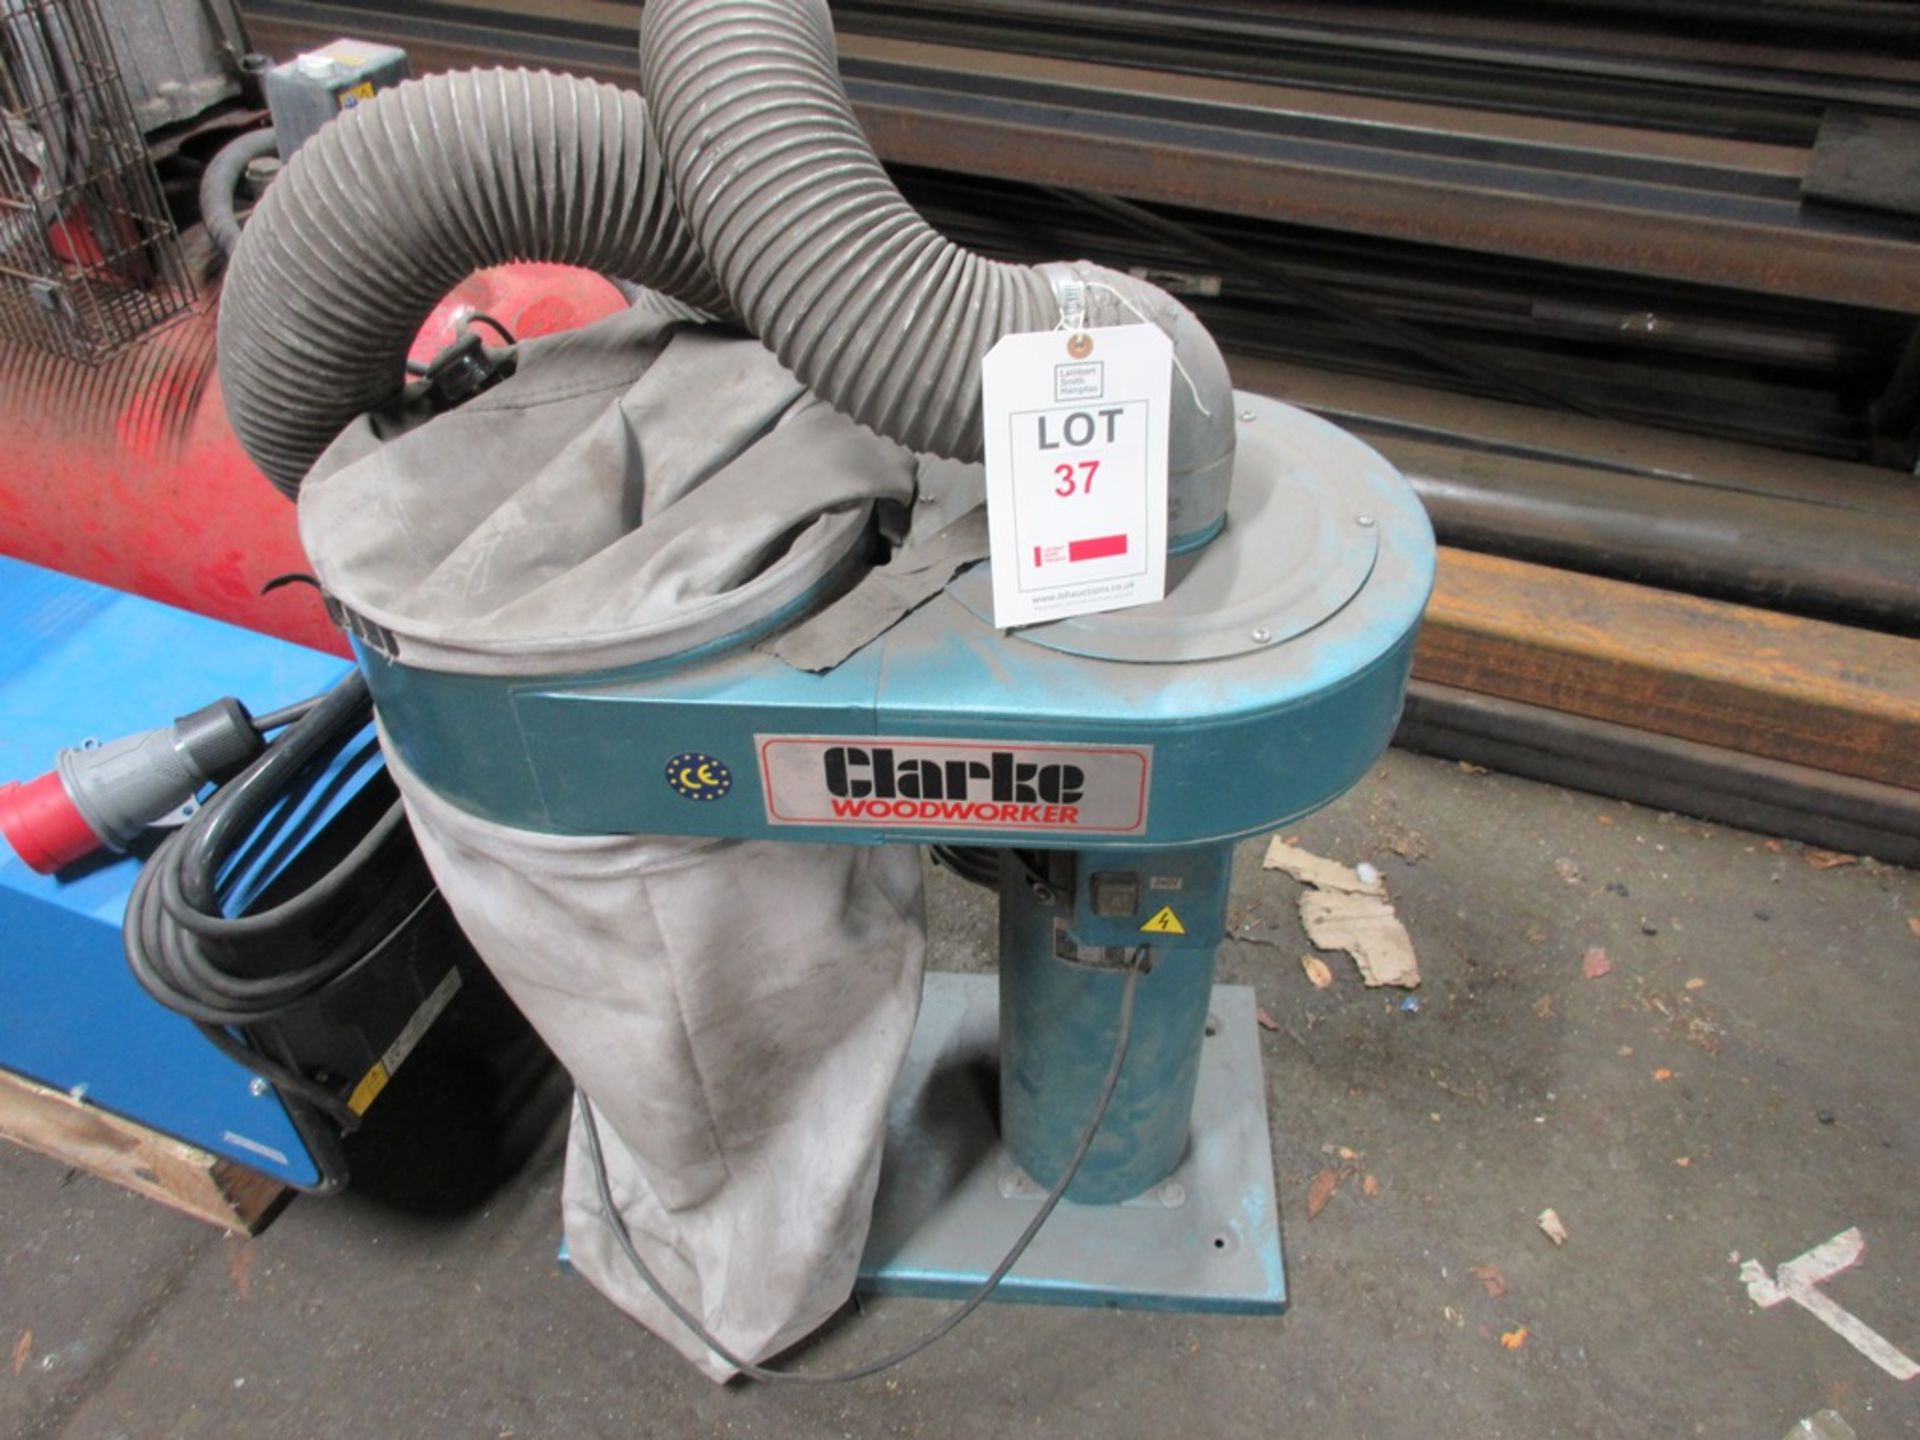 Clarke woodworker single bag dust extractor, 240v - Image 2 of 7